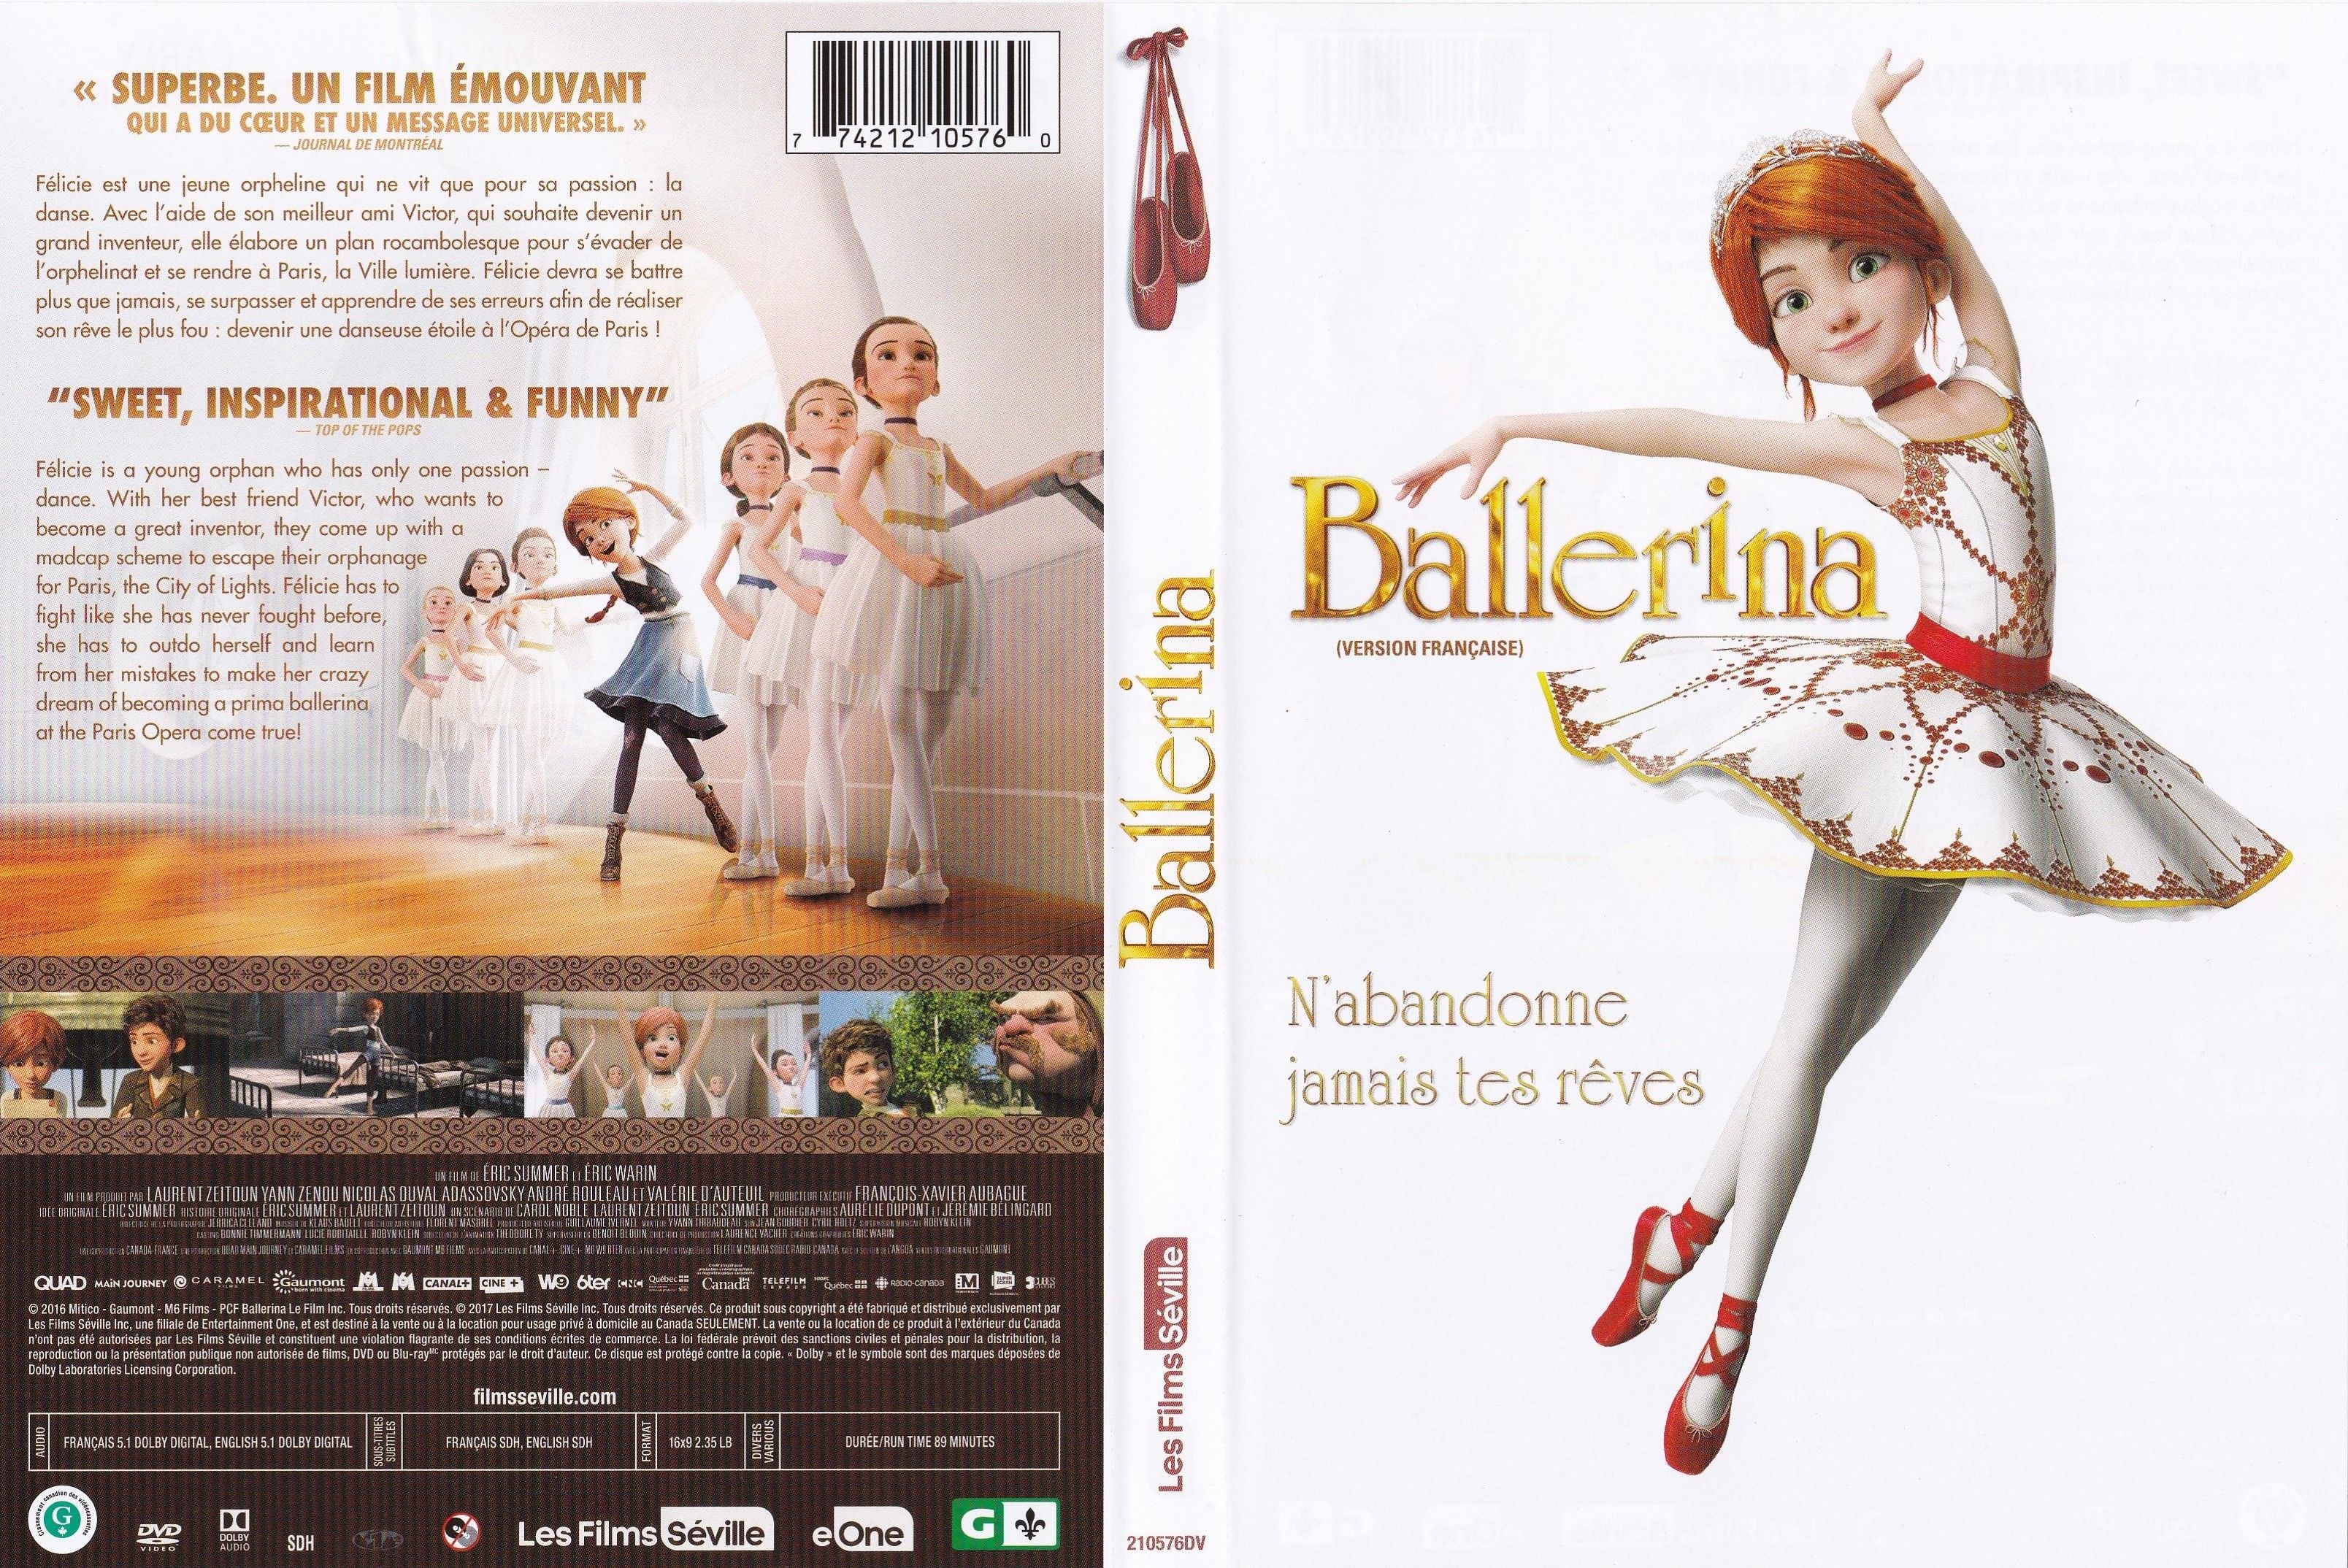 Jaquette DVD Ballerina (canadienne)